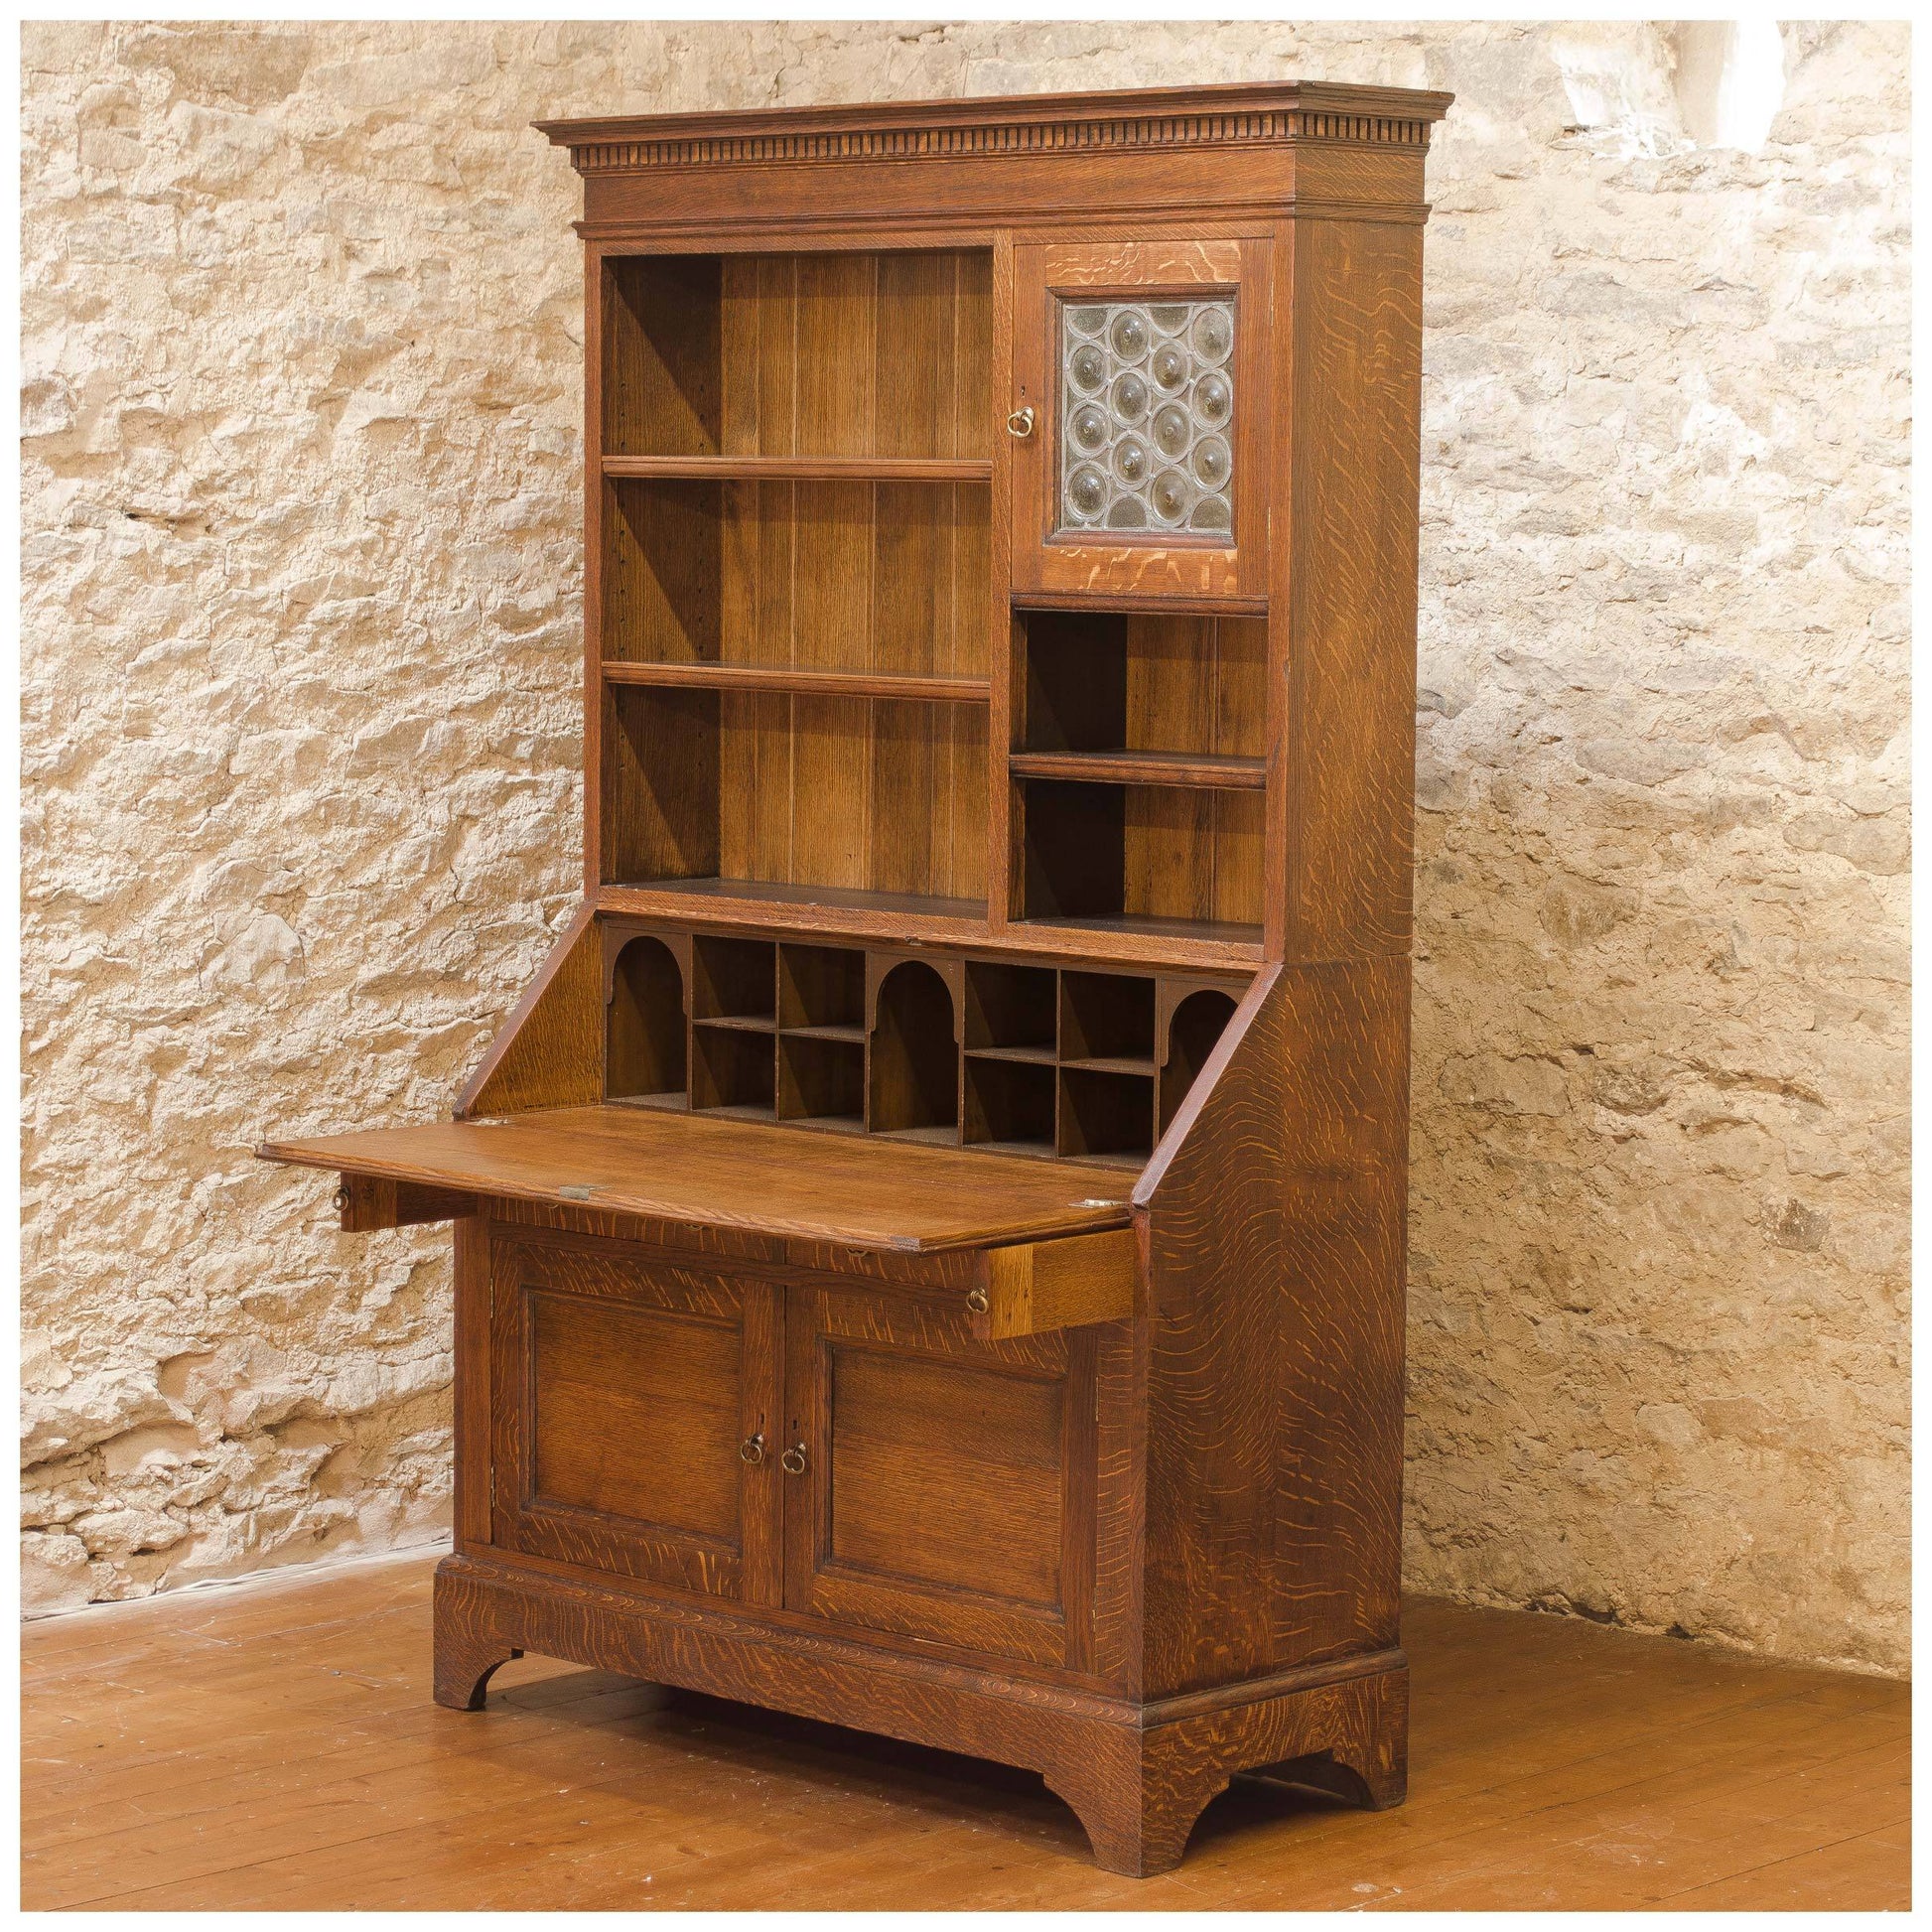 Liberty & Co Arts & Crafts English Oak Bureau Bookcase c. 1900